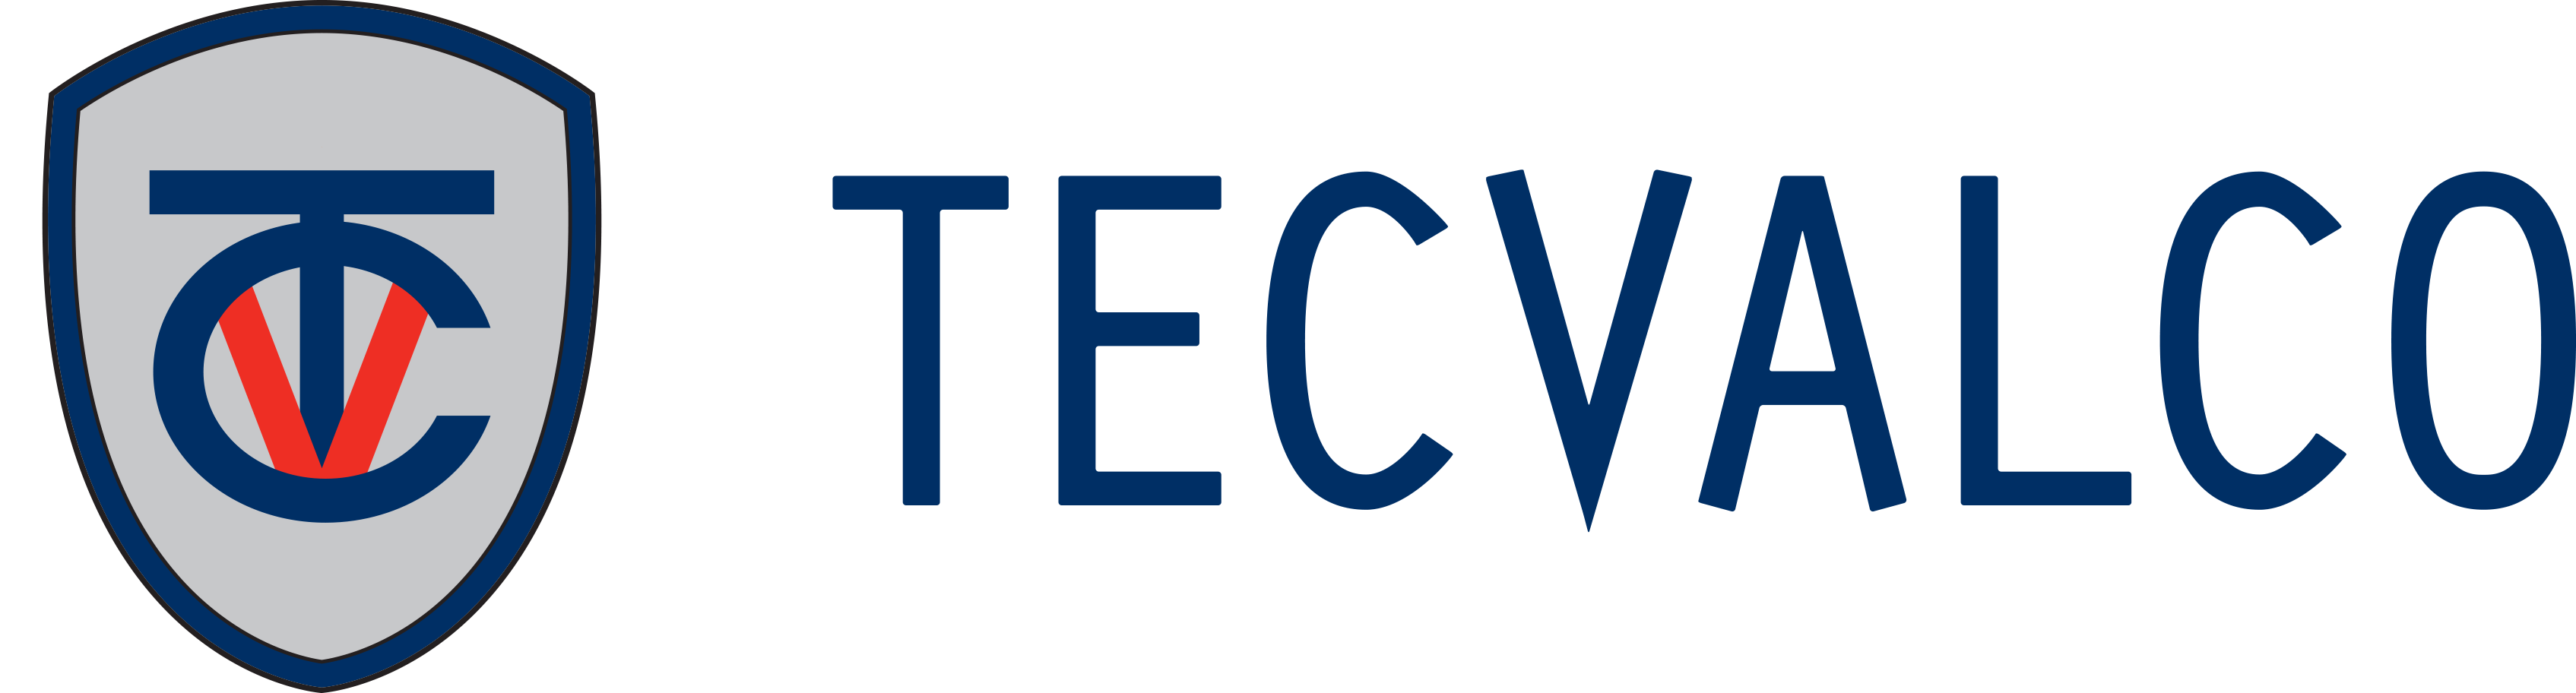 1342-tecvalco-logo-2017-horizontal-spot-colour-16442595601111.png